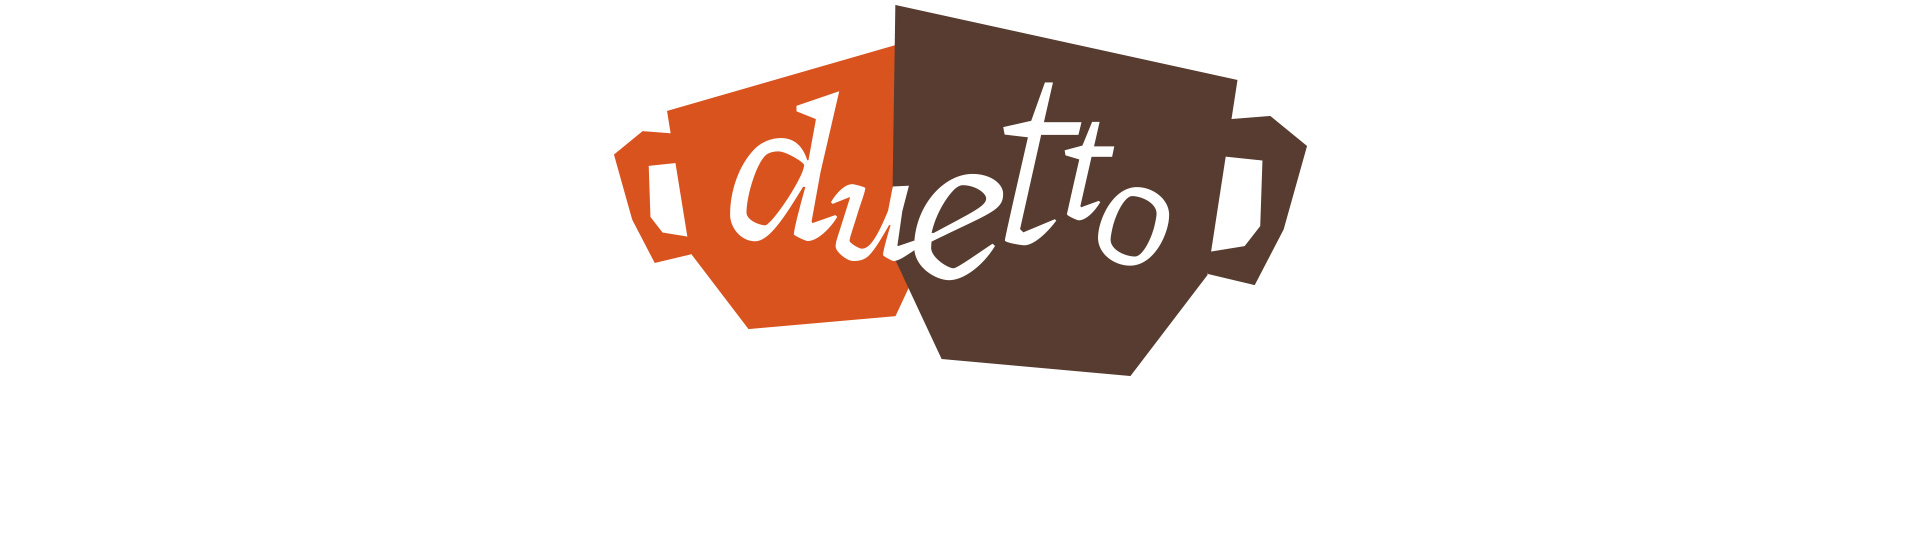 duetto_logo_duo2_1920